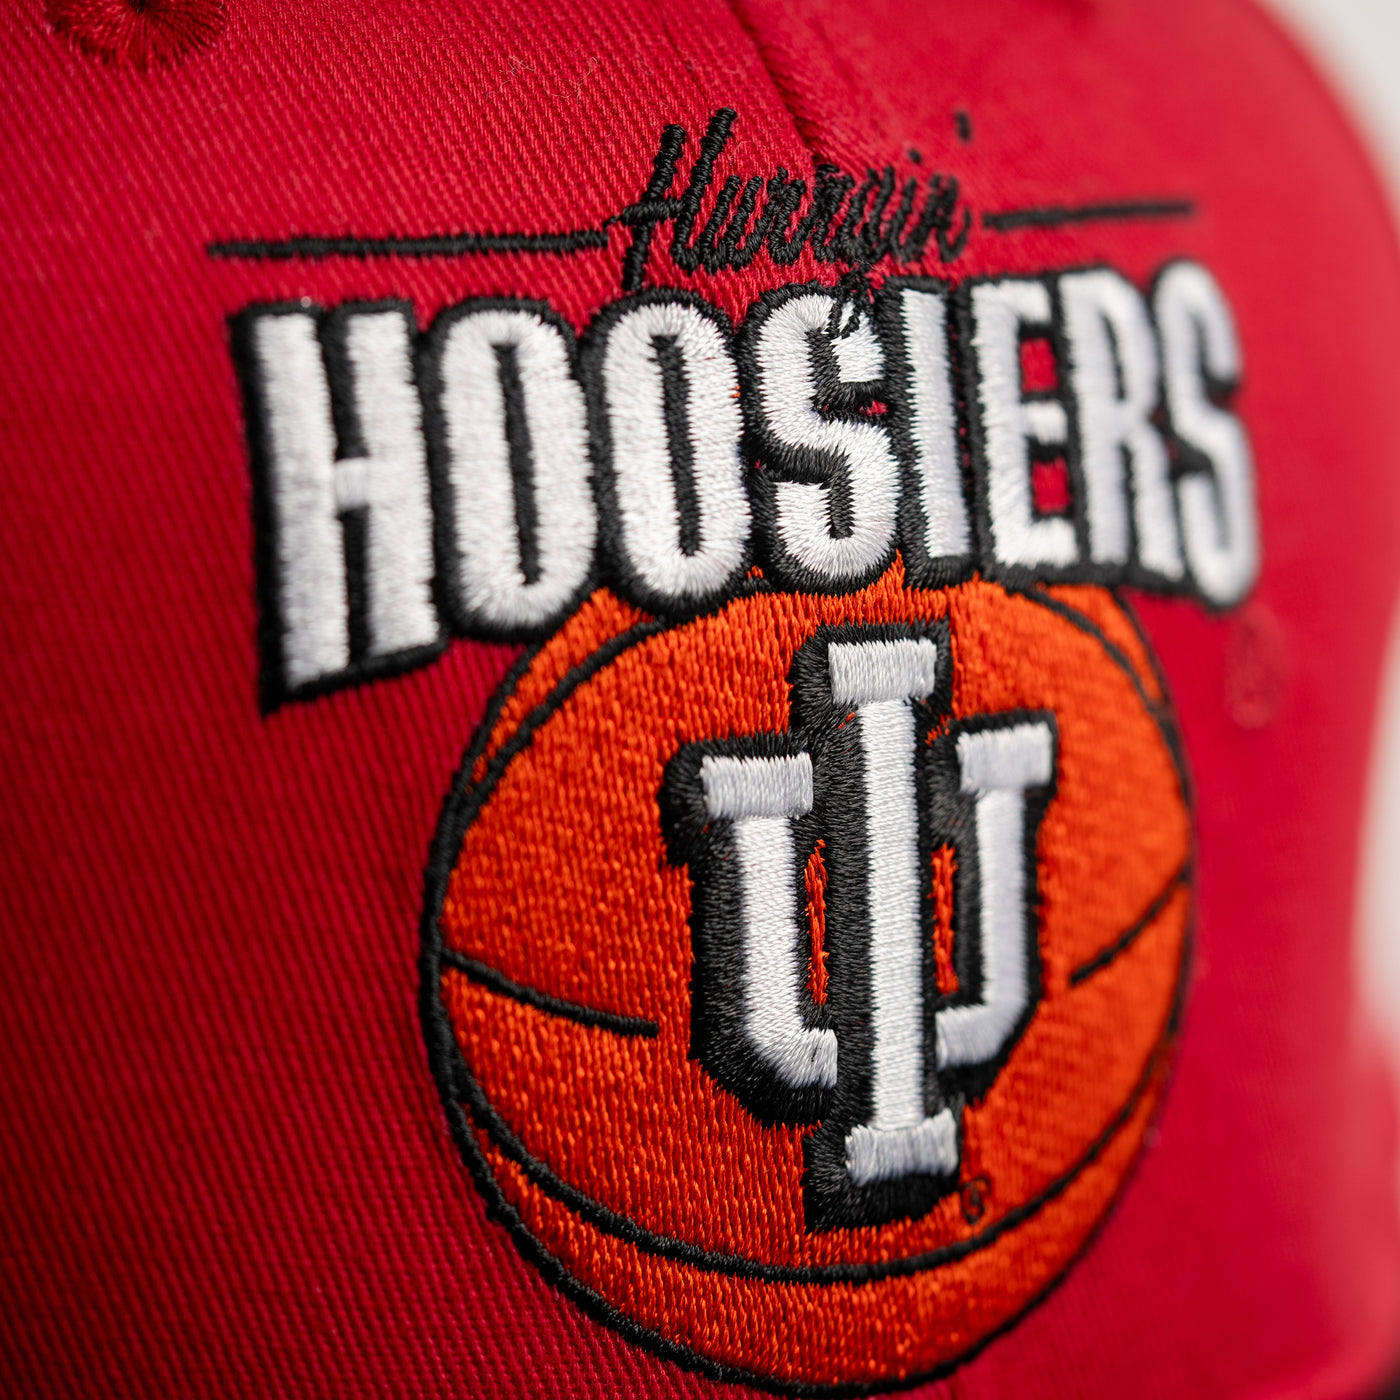 IU Basketball "Hurryin' Hoosiers" Retro Snapback Hat